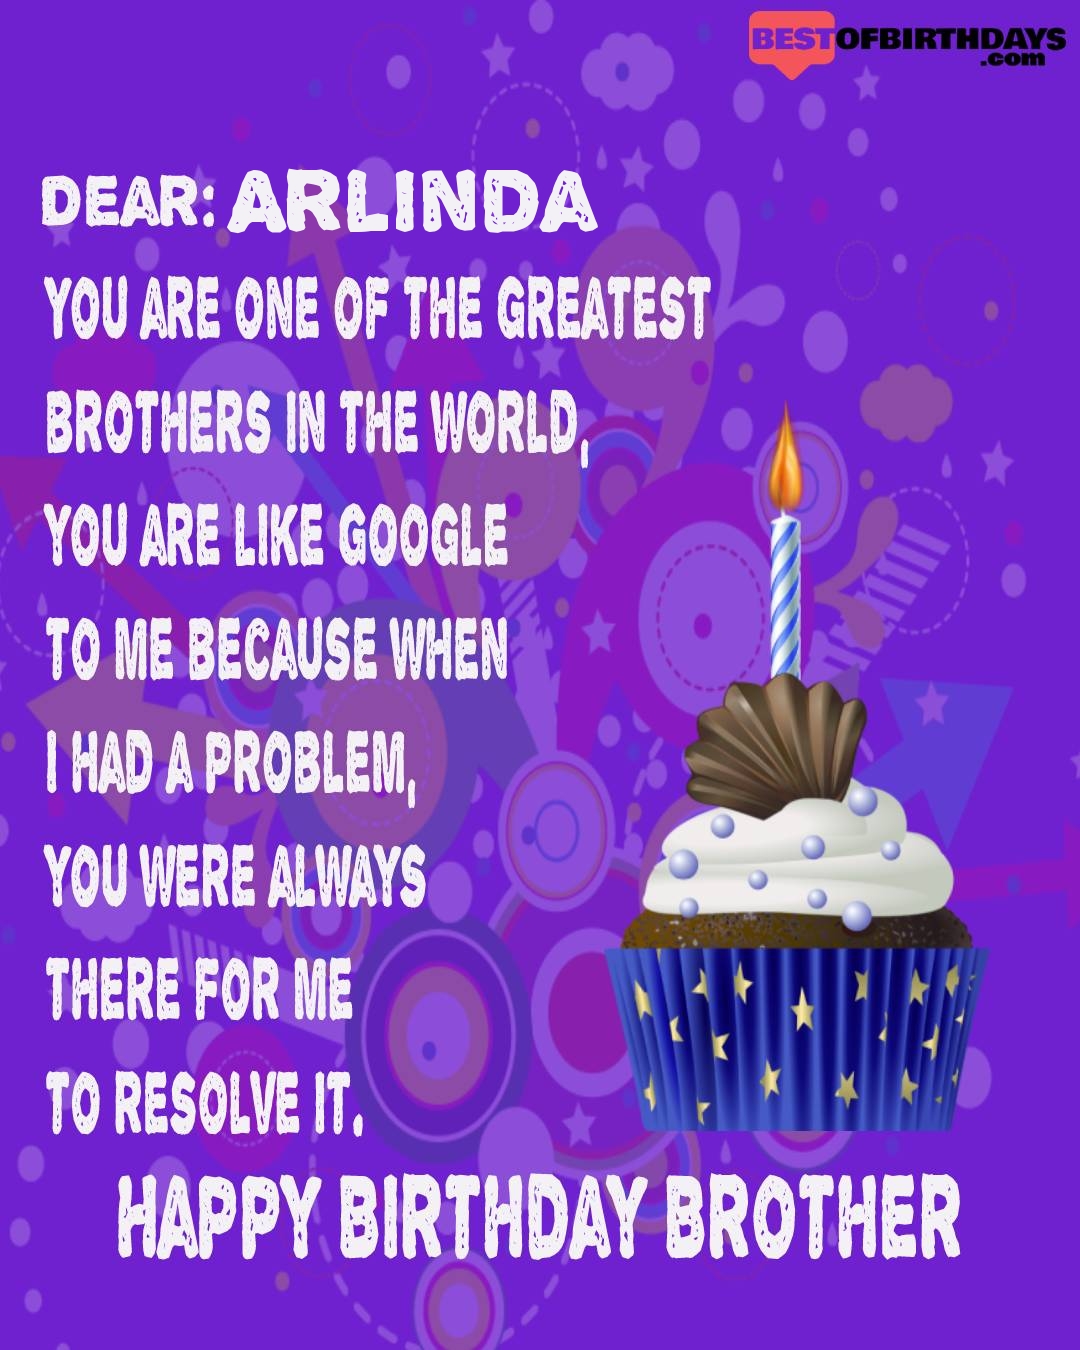 Happy birthday arlinda bhai brother bro